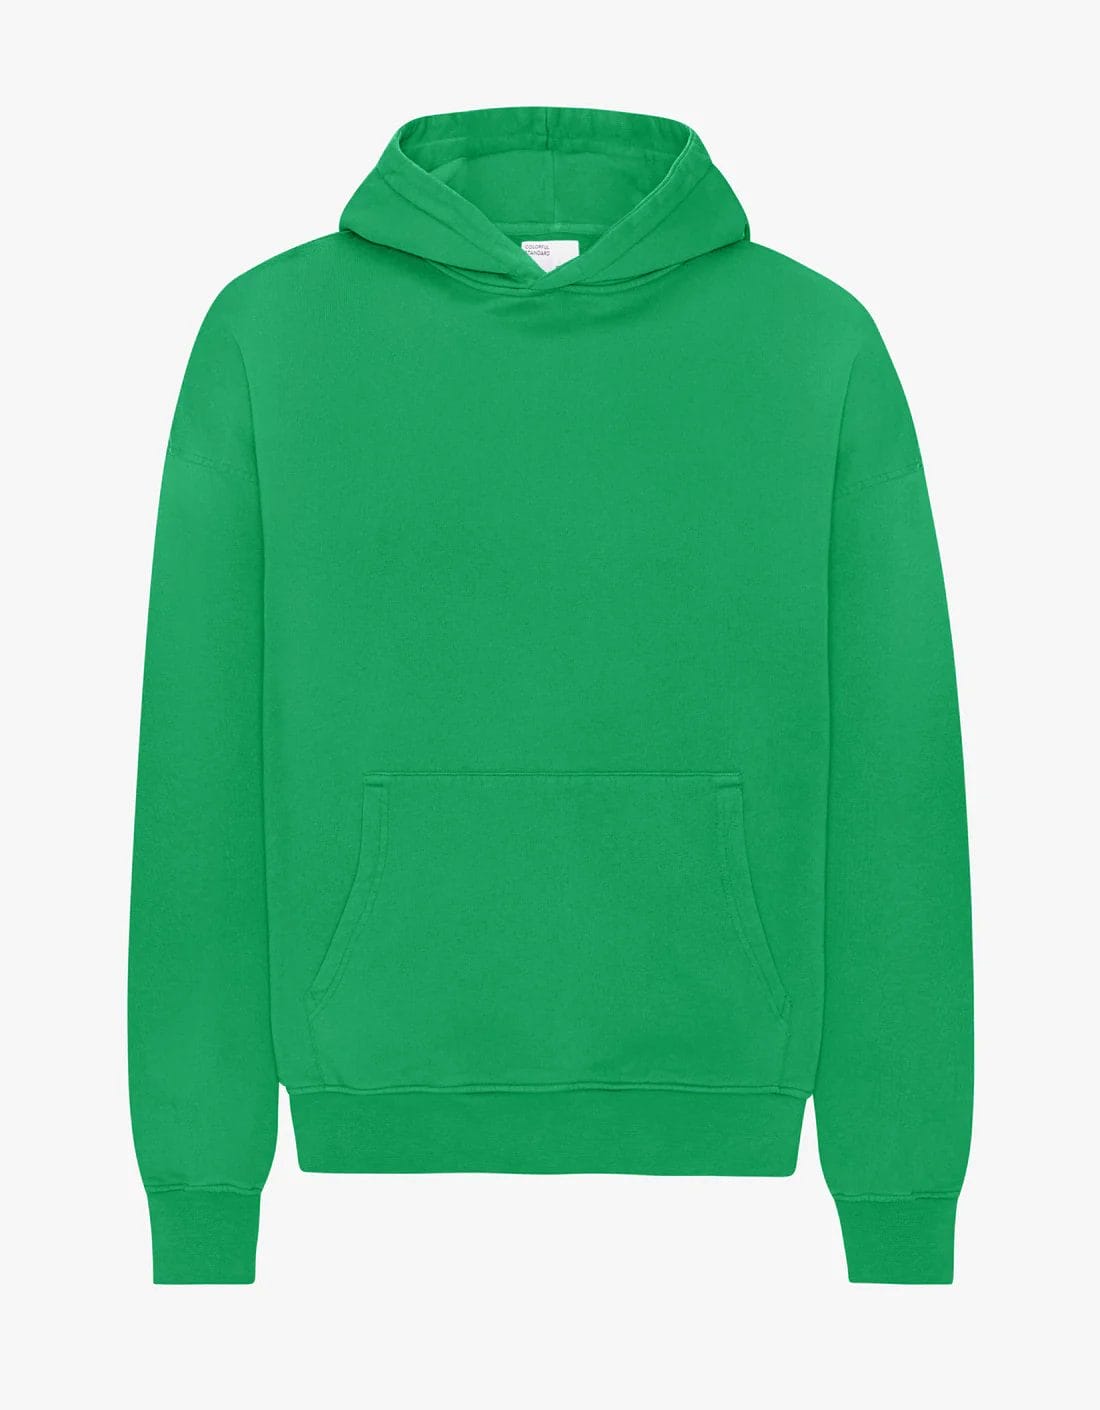 organic cotton vegan friendly hoodie for men in green